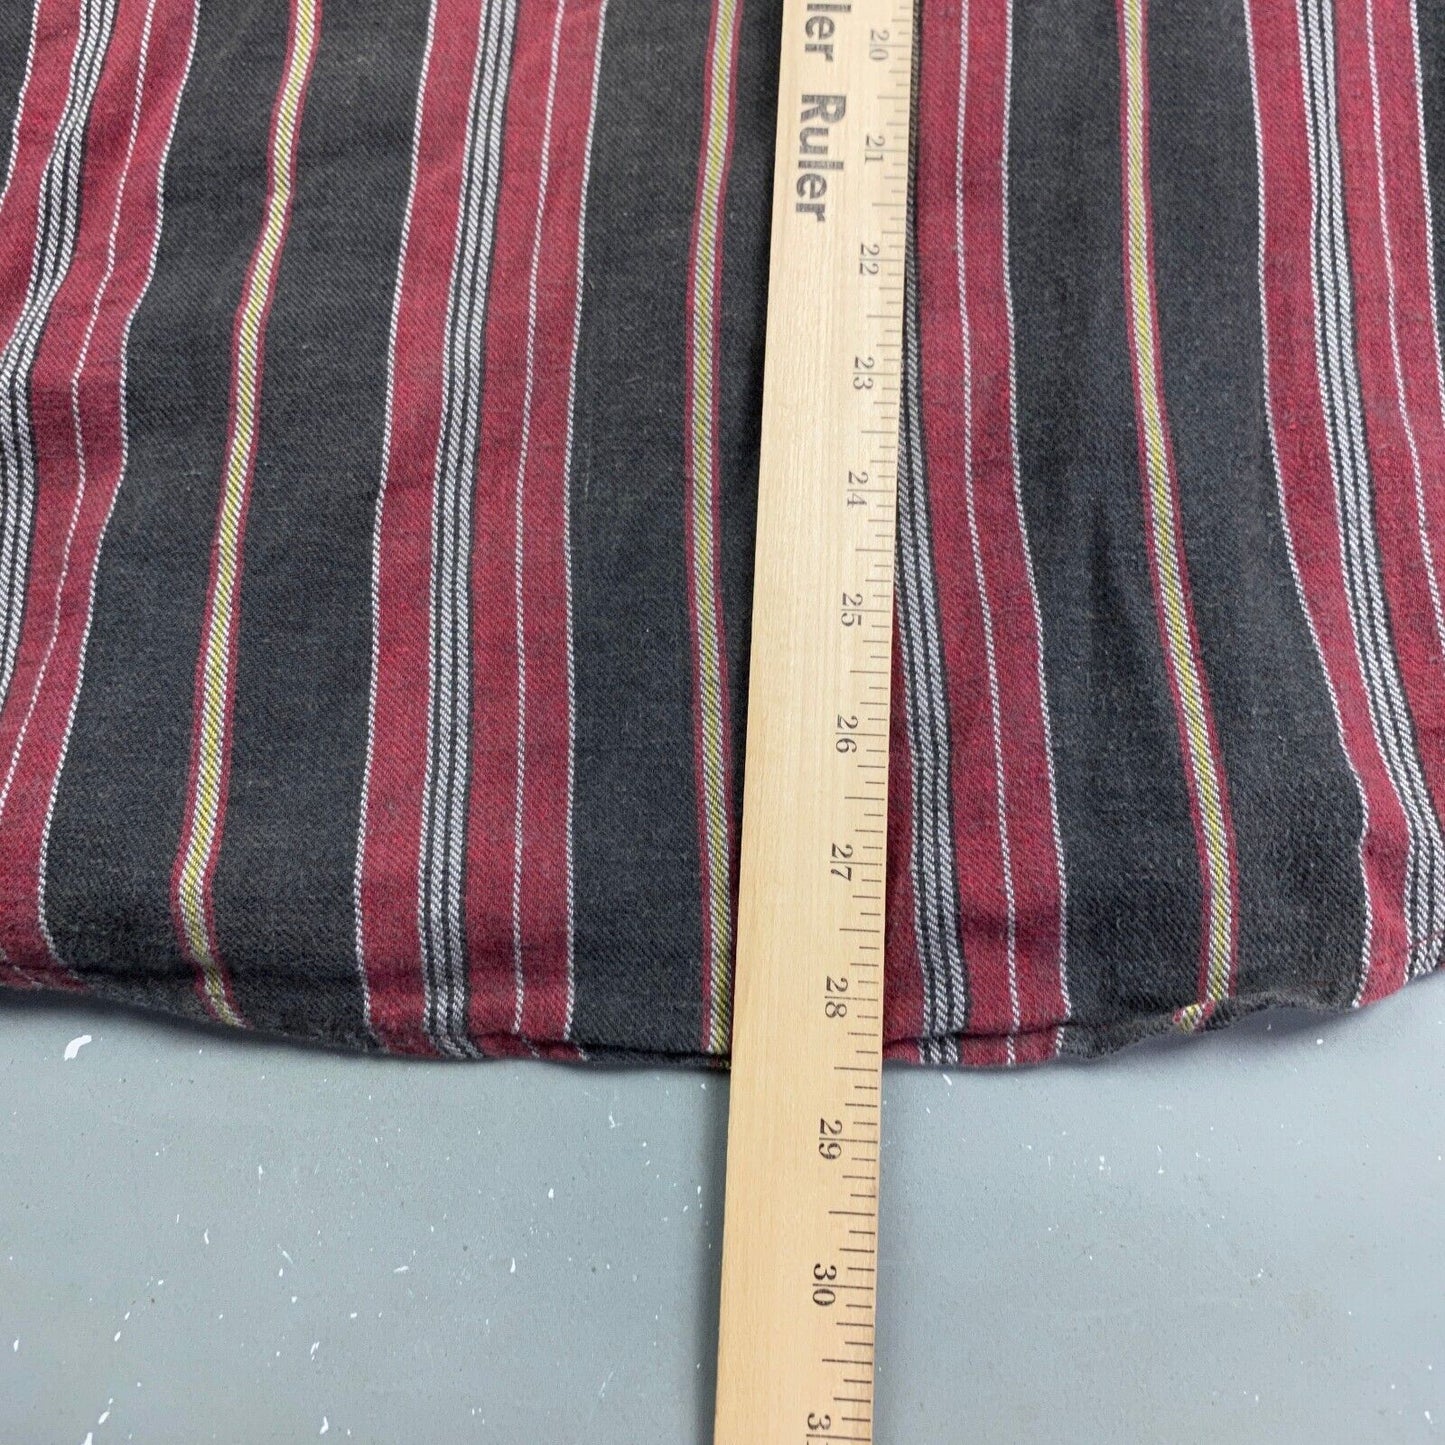 VINTAGE 90s Wrangler Striped Pearl Snap Western Shirt sz Medium Adult